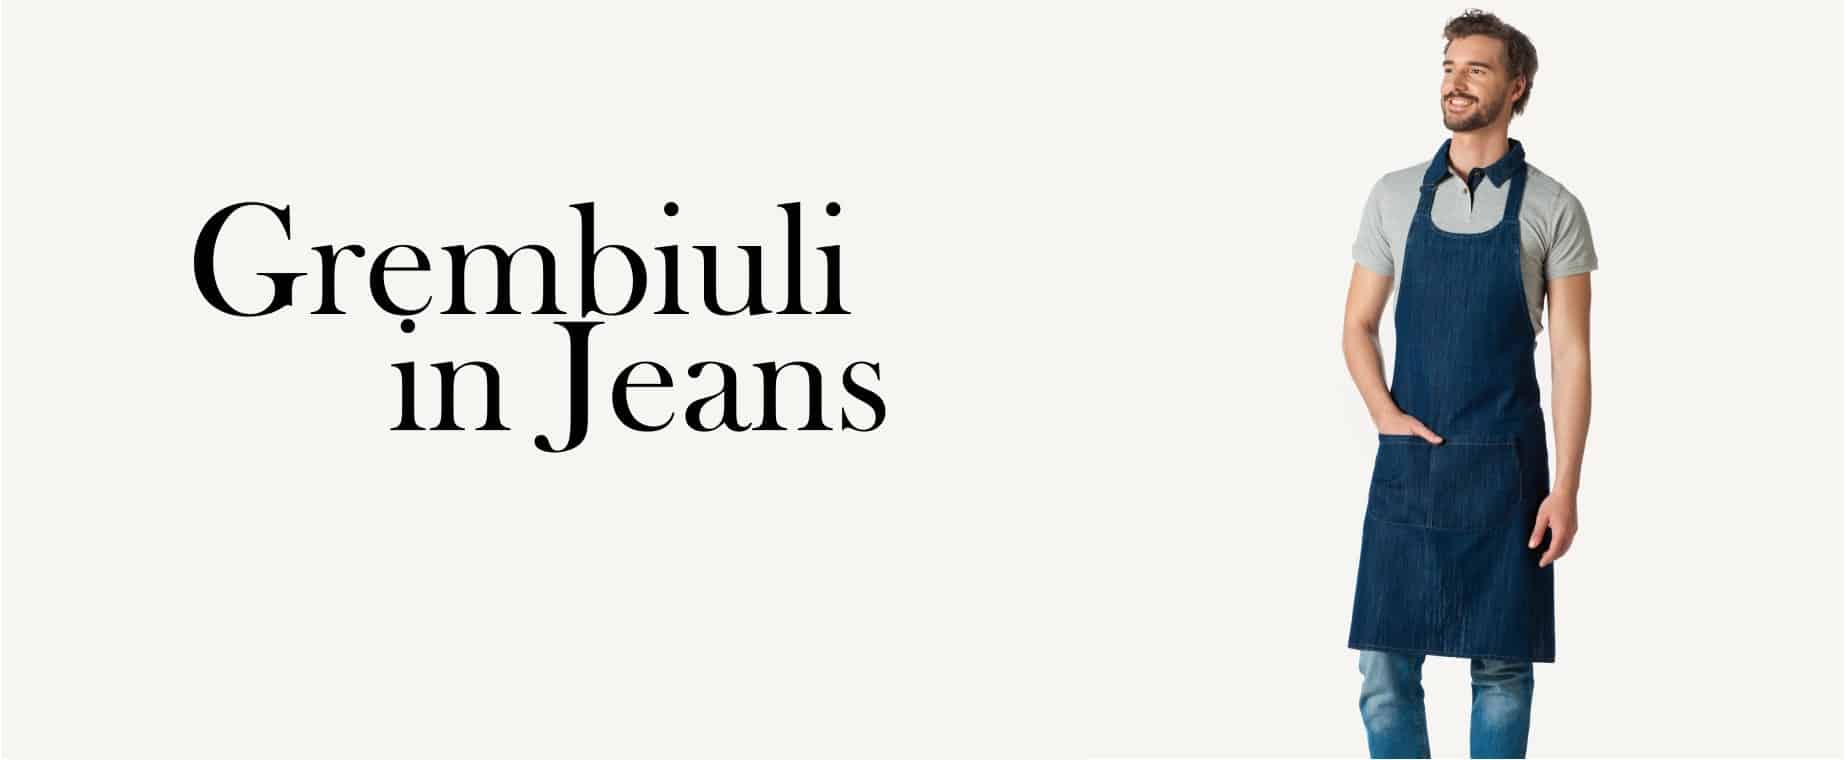 Grembiuli in jeans